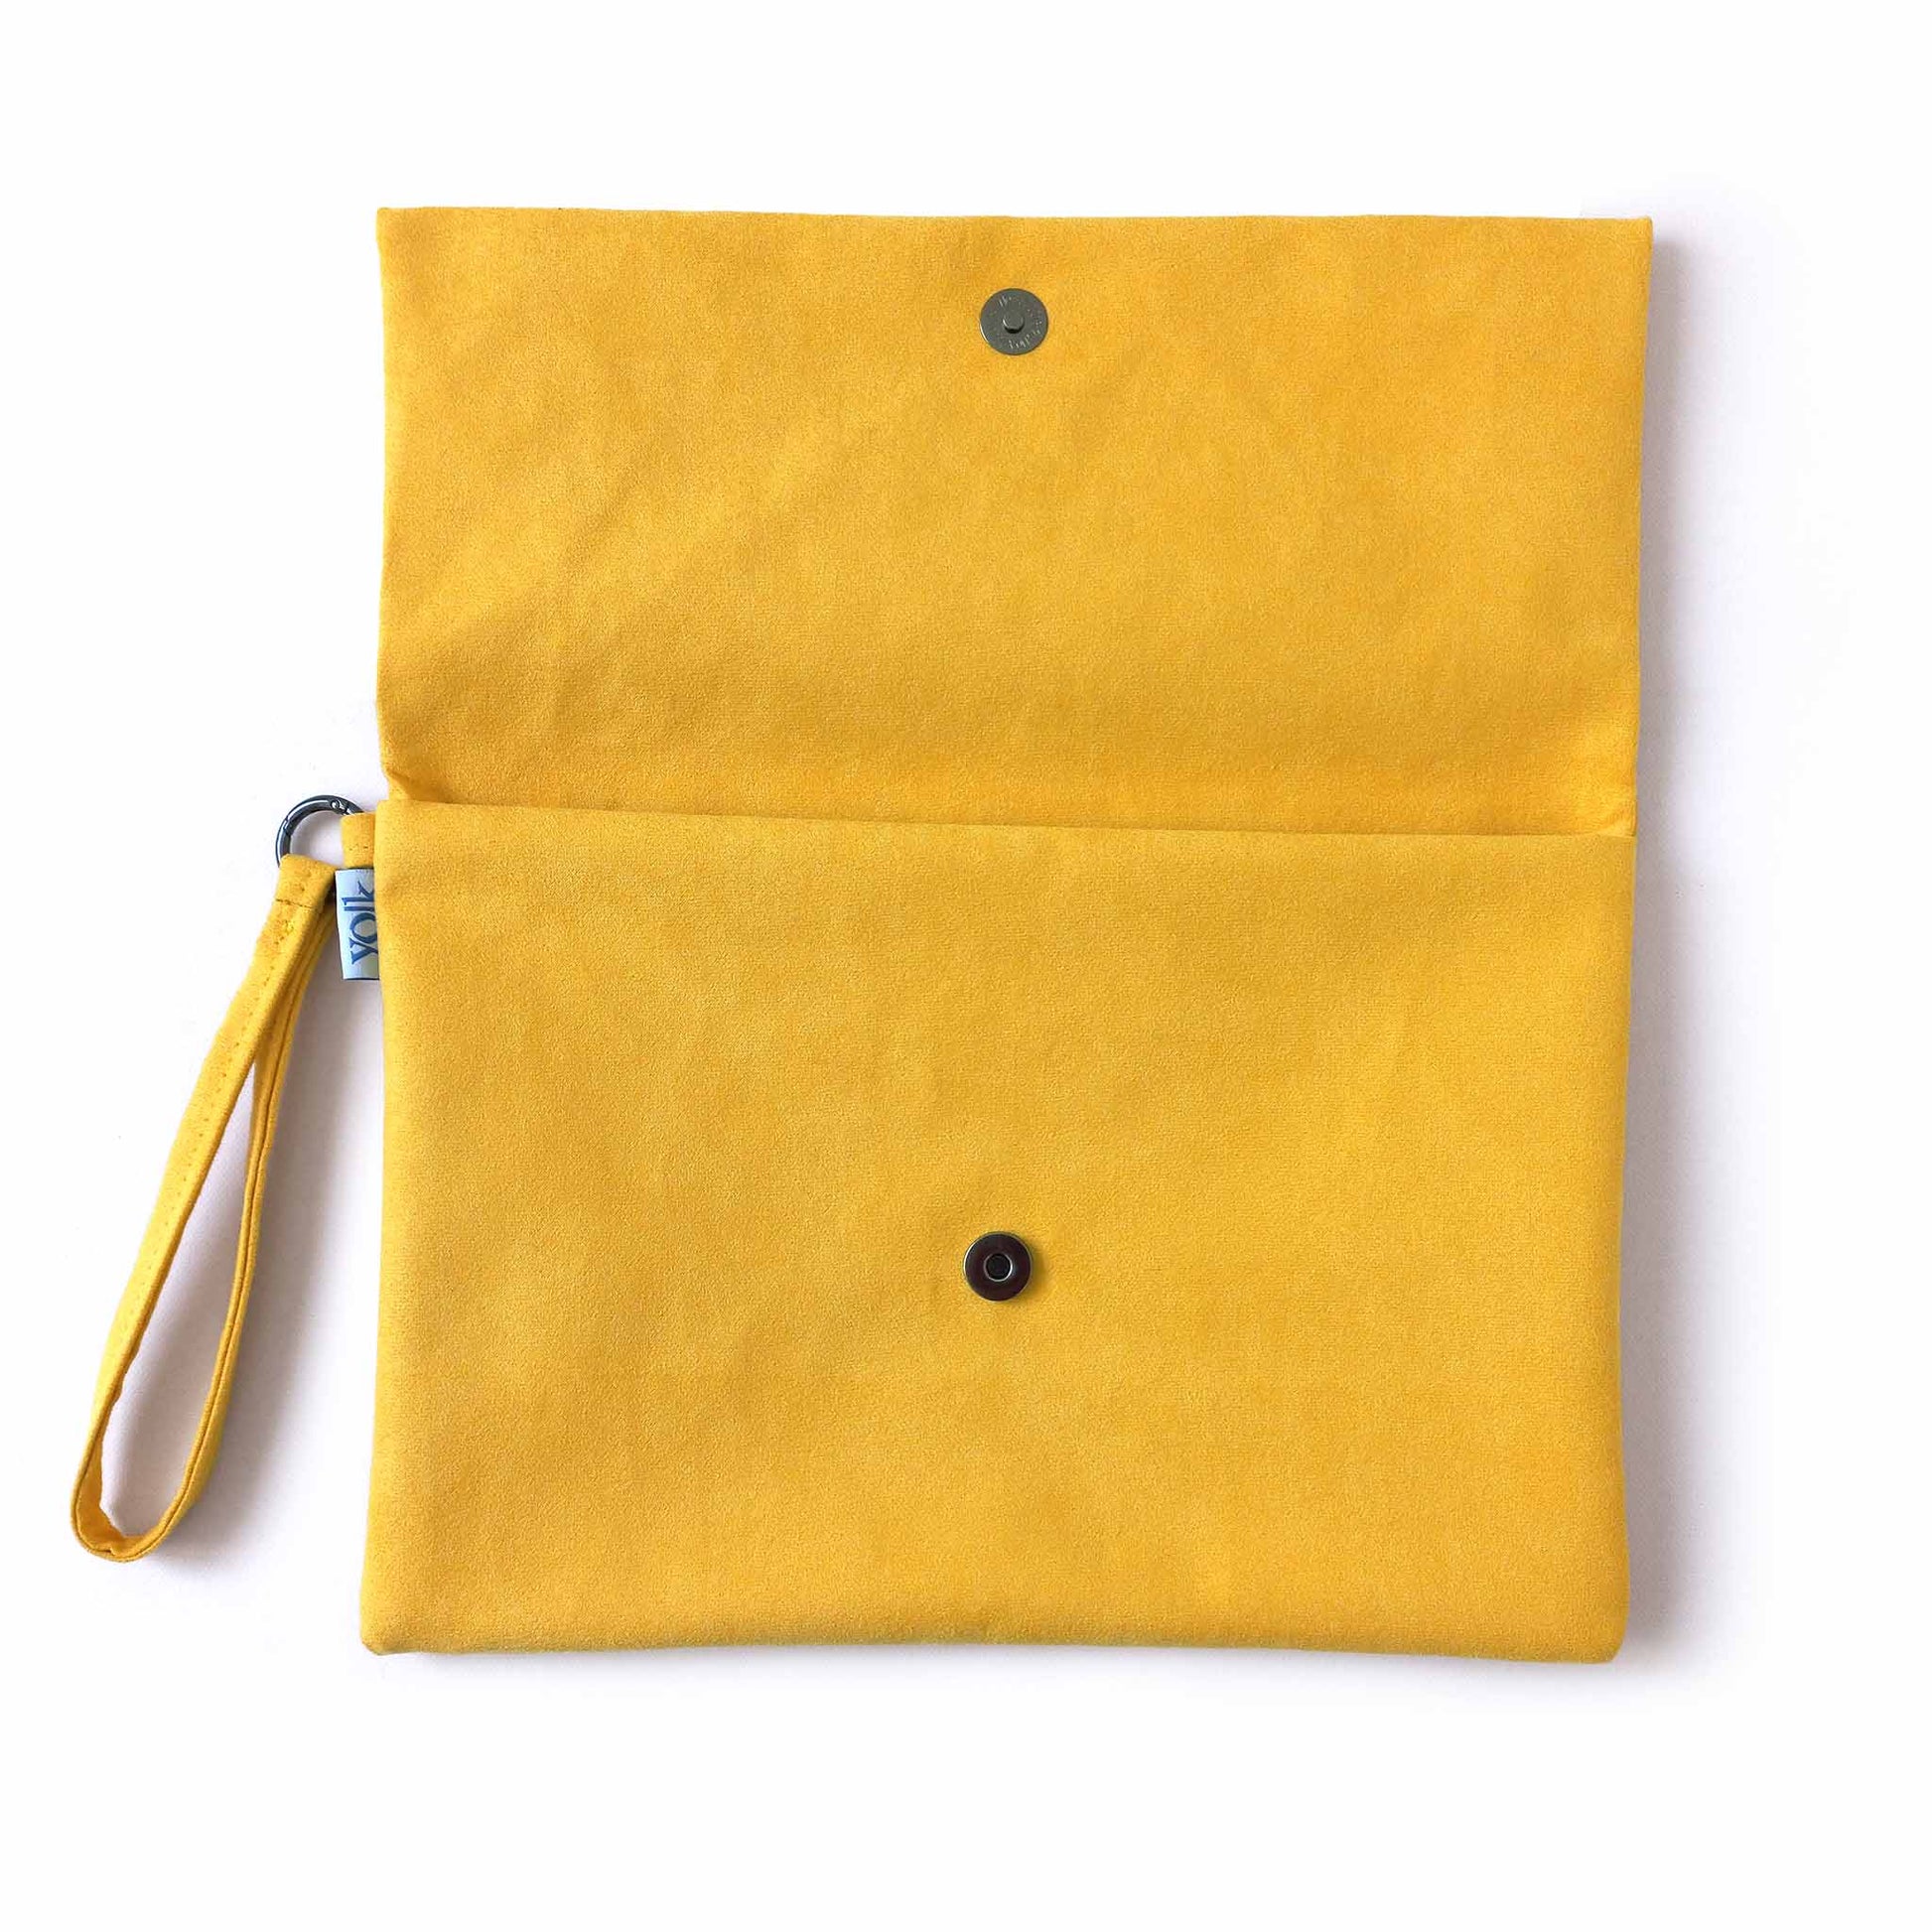 Open yellow suede clutch bag, metallic button detail